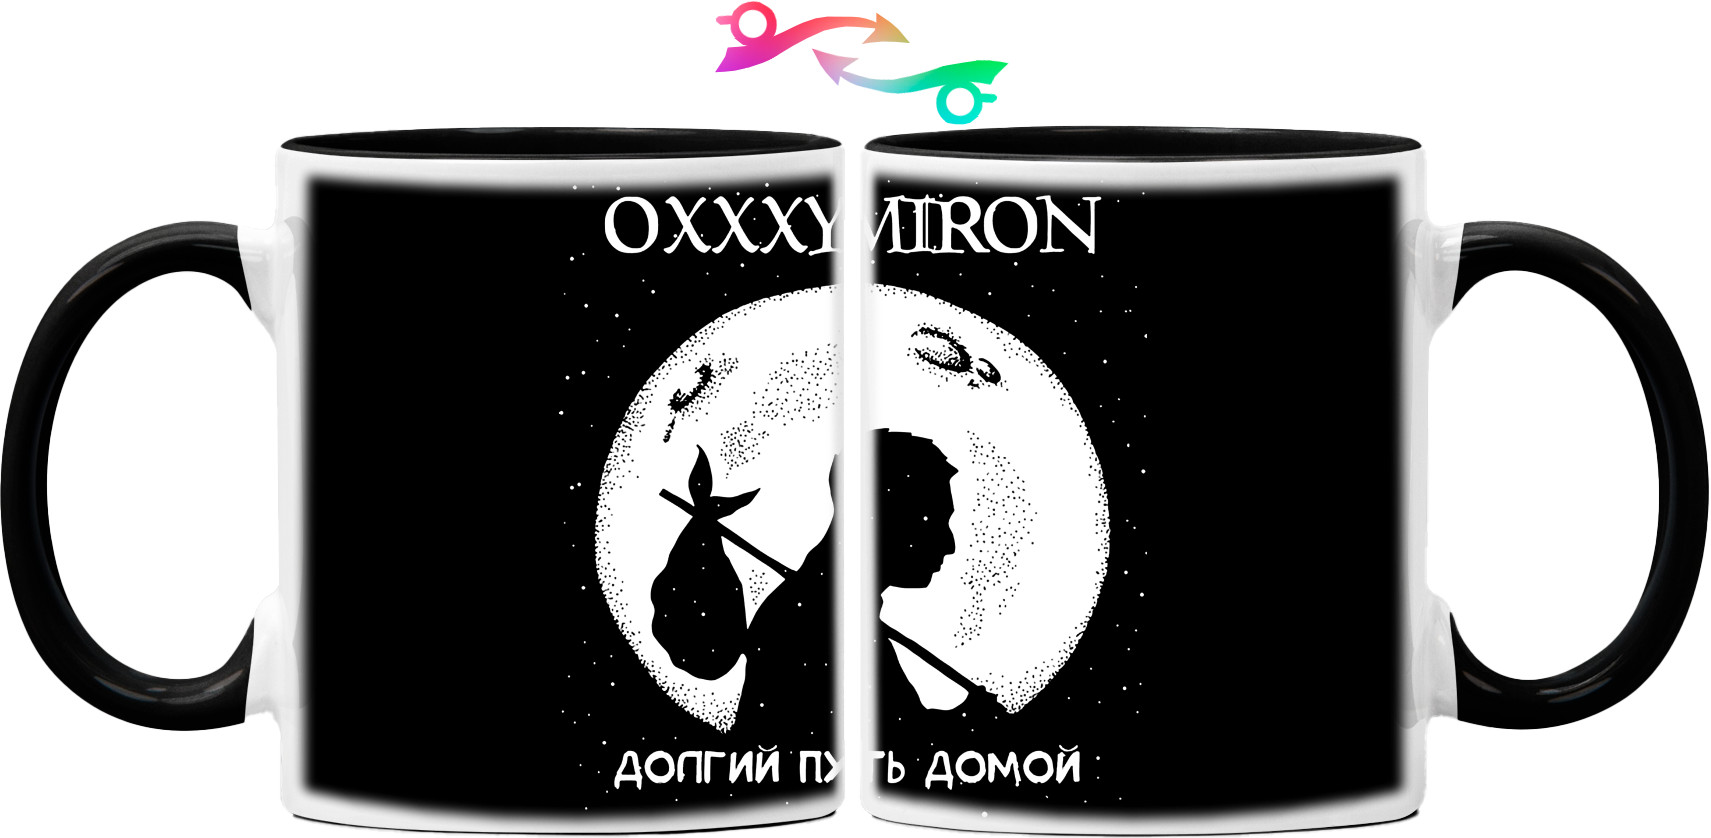 Oxxxymiron "Долгий путь домой"